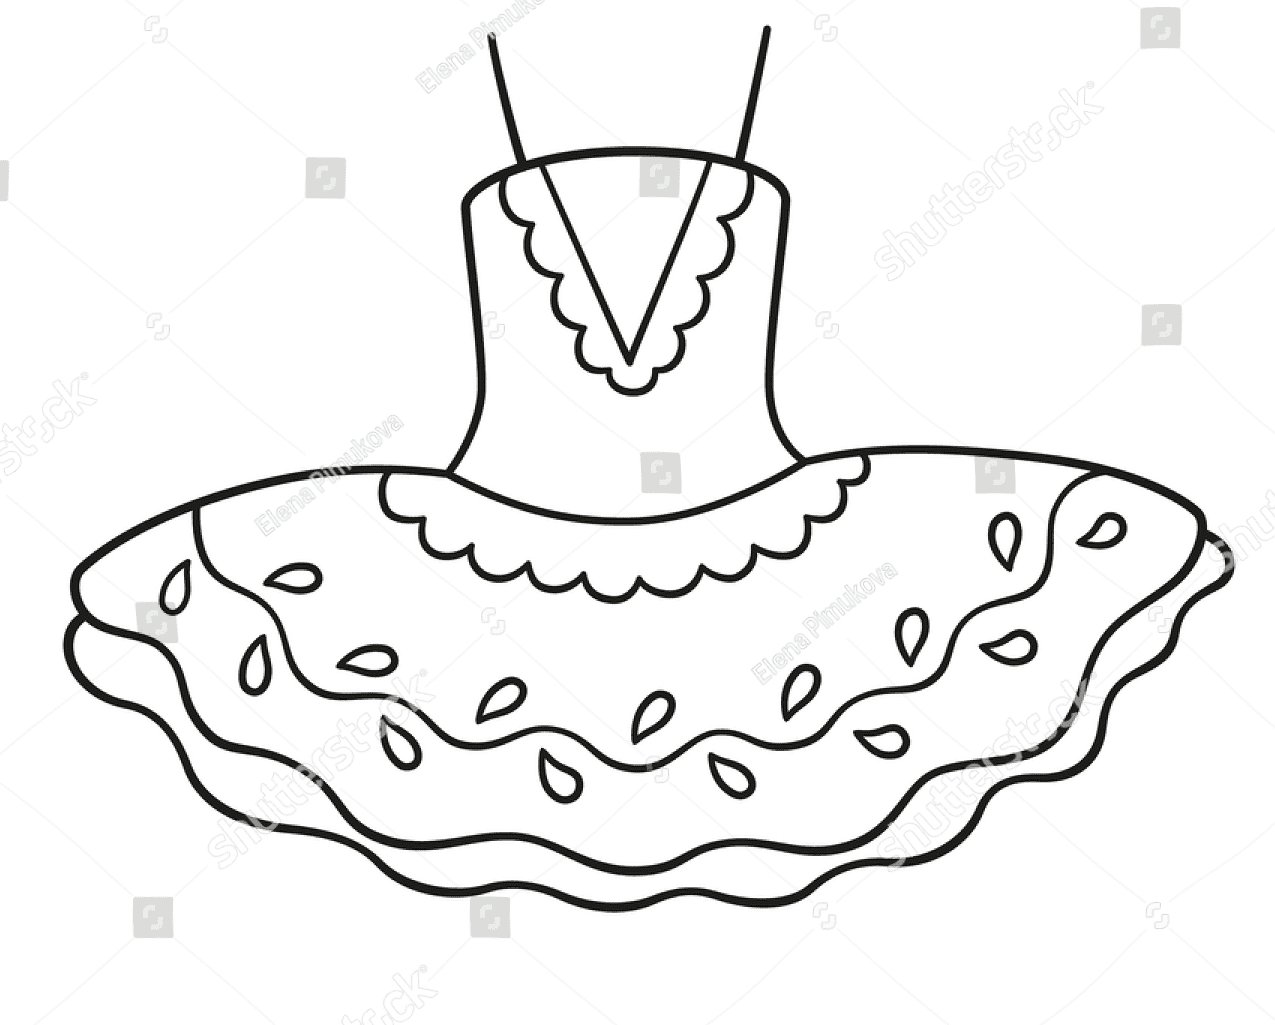 Desenho de vestido de bailarina para colorir